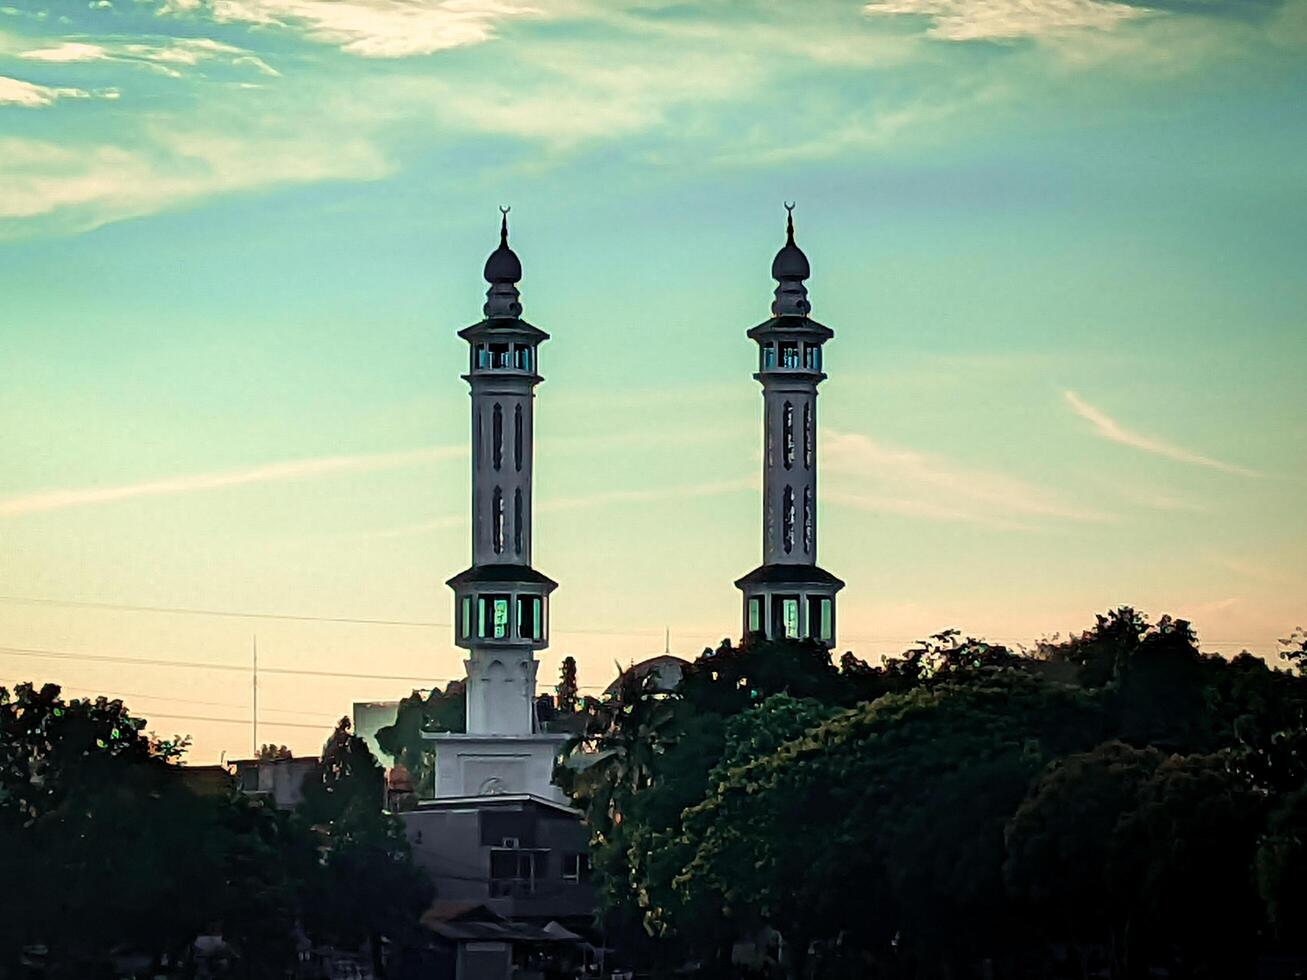 Cuba moskee met lucht achtergrond foto